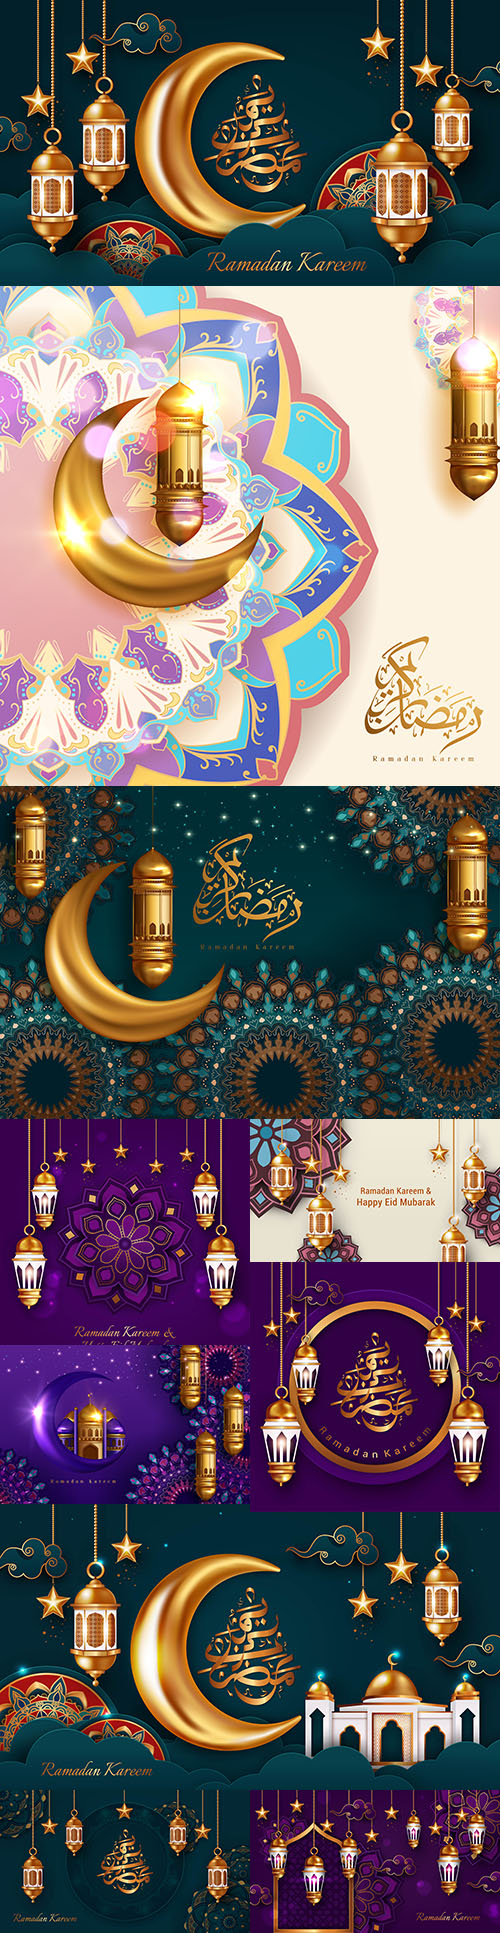 Ramadan Kareem backgrounds with golden lantern and crescent
